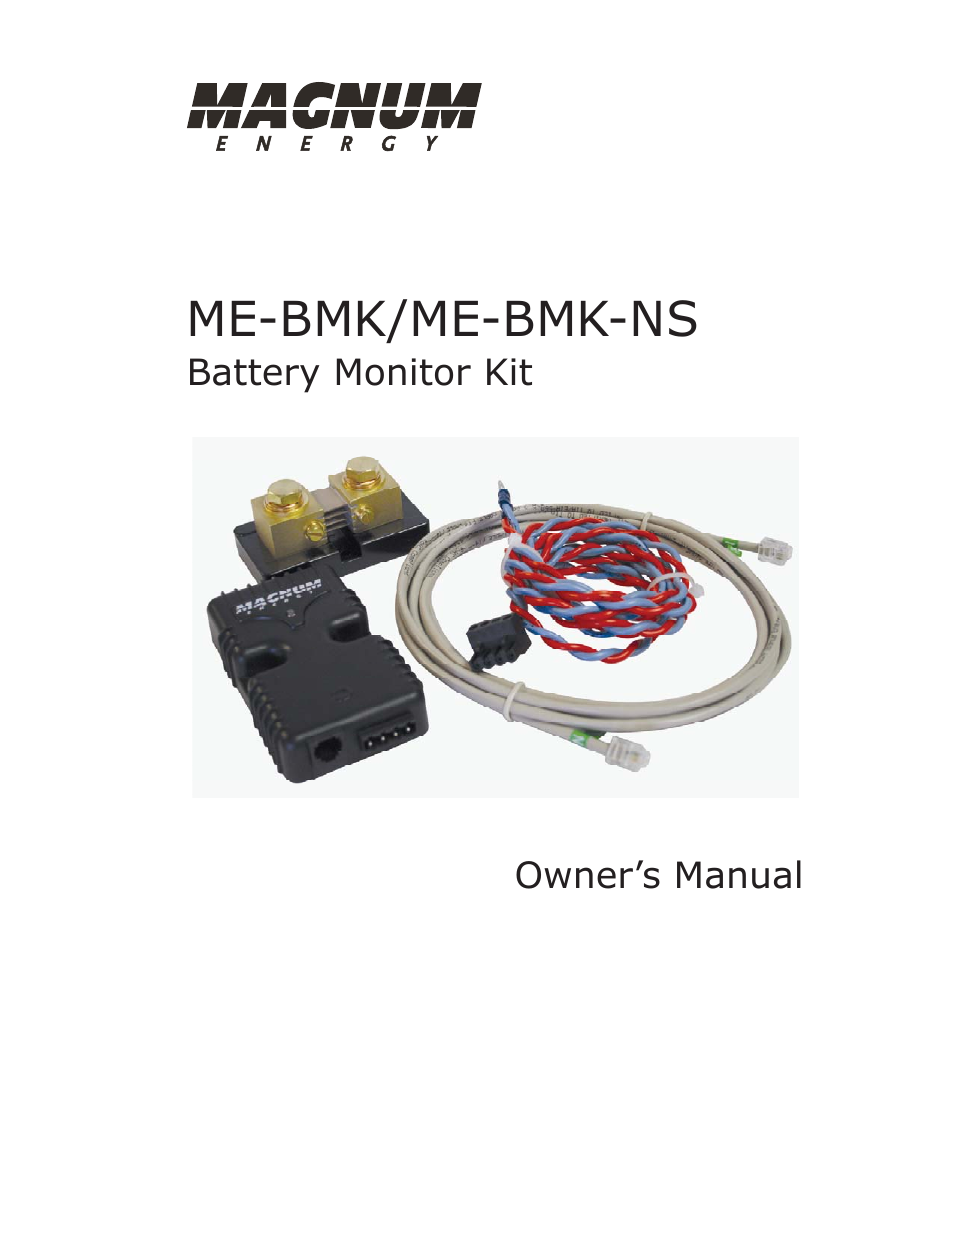 Battery Monitor Kit ME-BMK